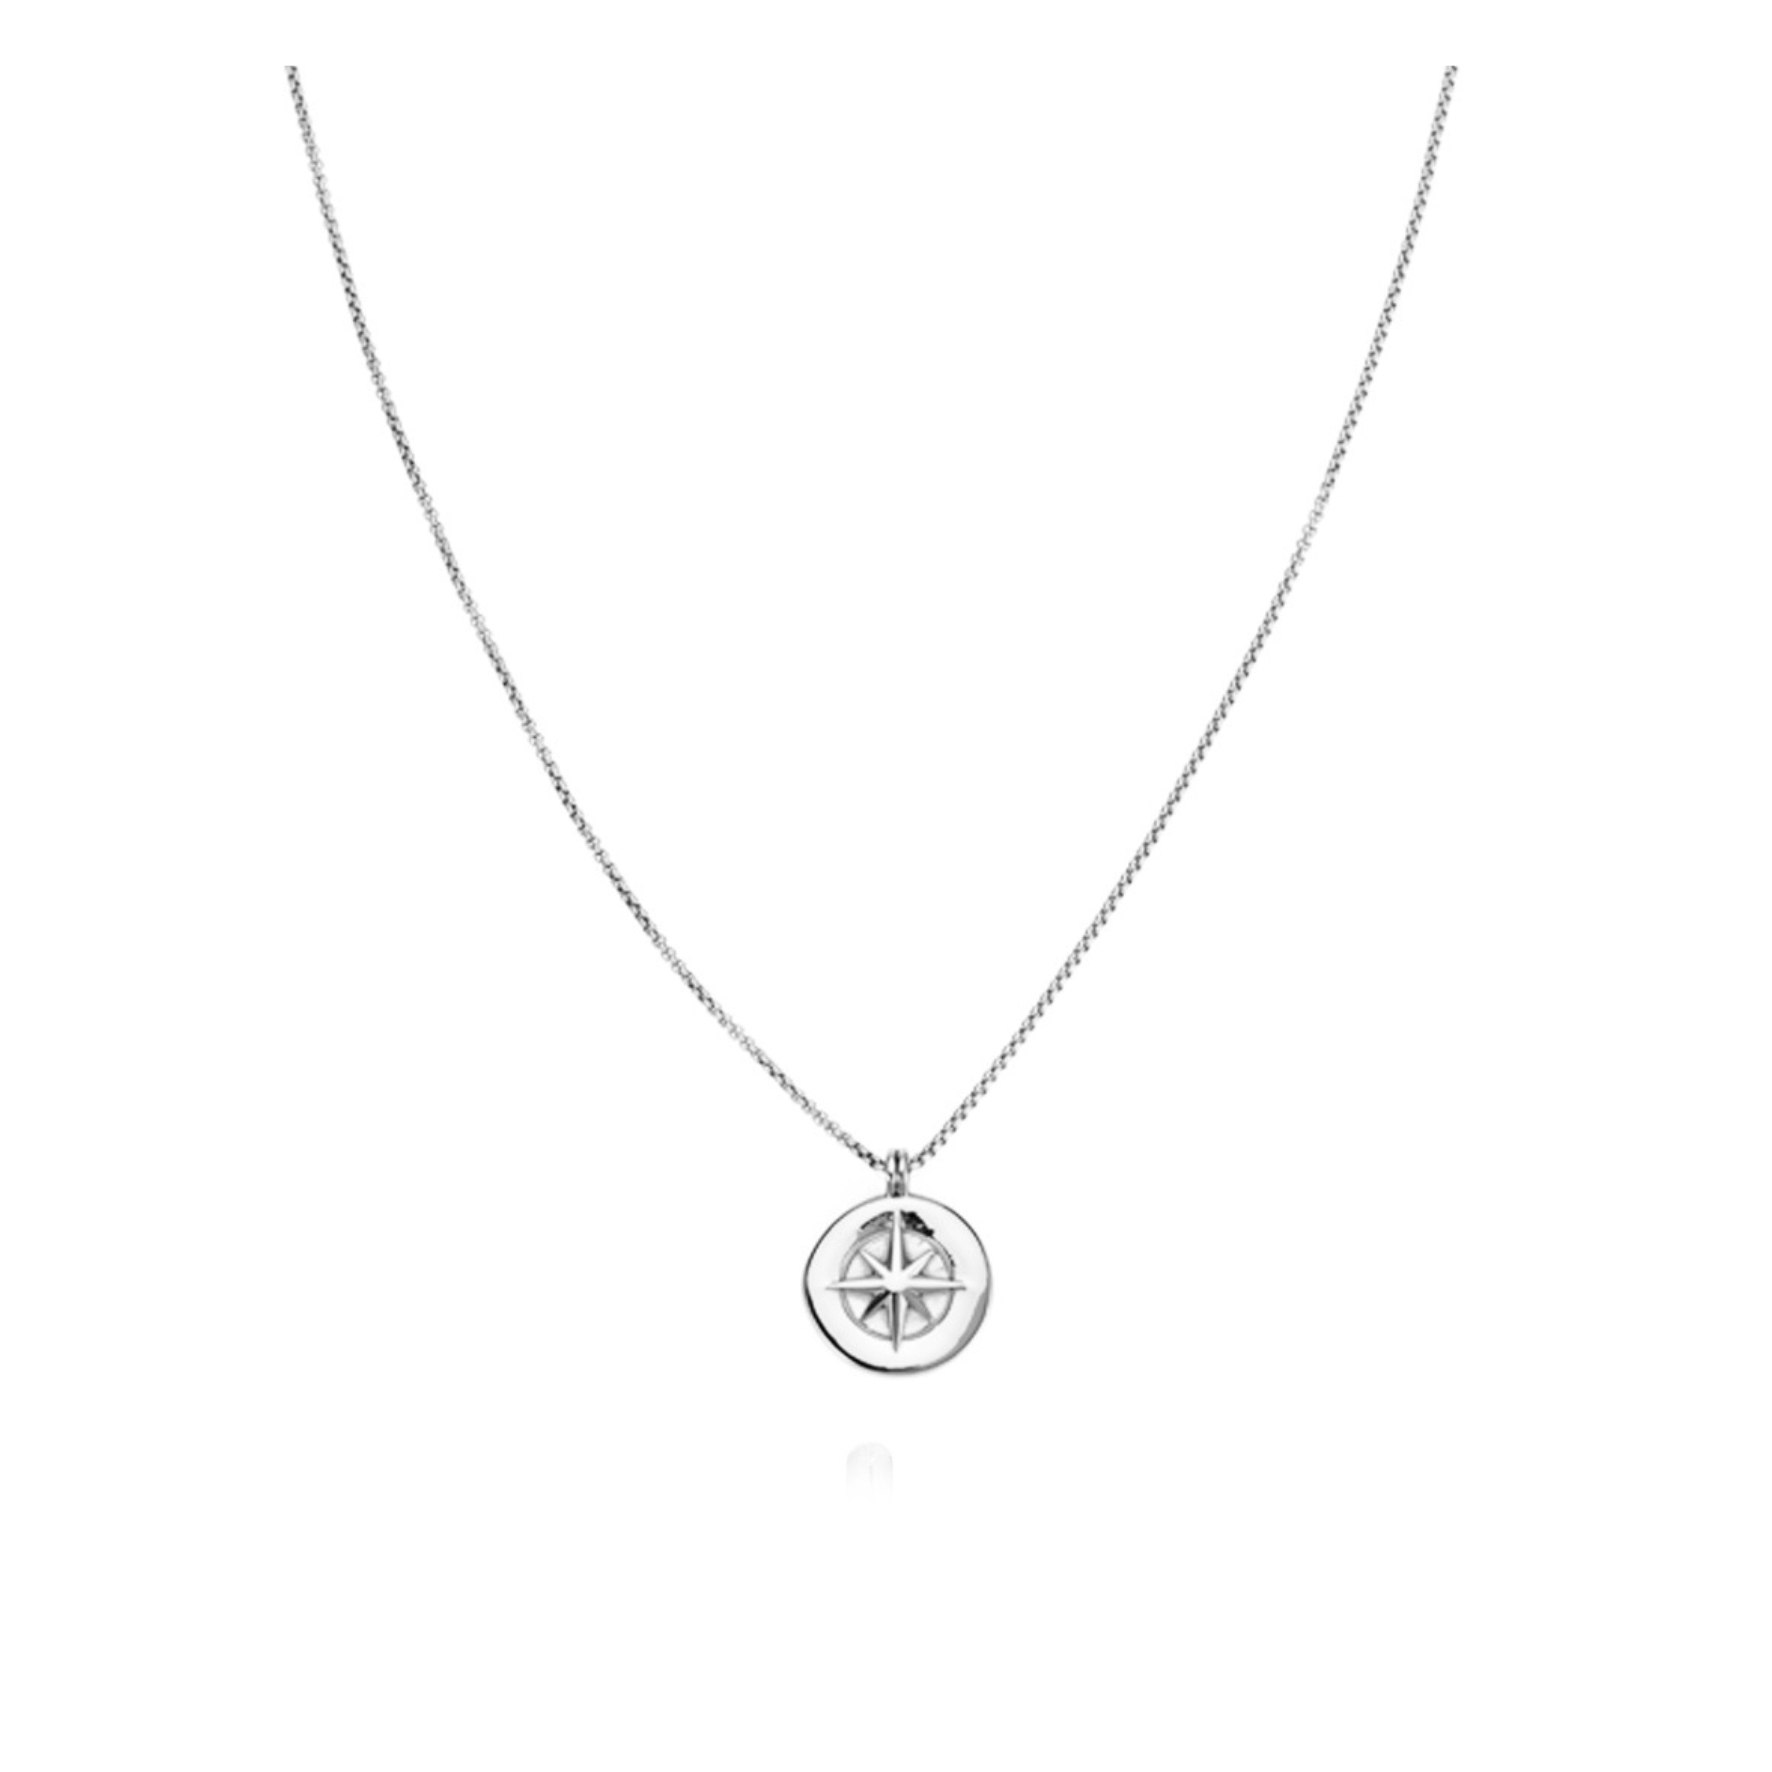 Small Compass Necklace fra SAMIE i Rustfritt stål